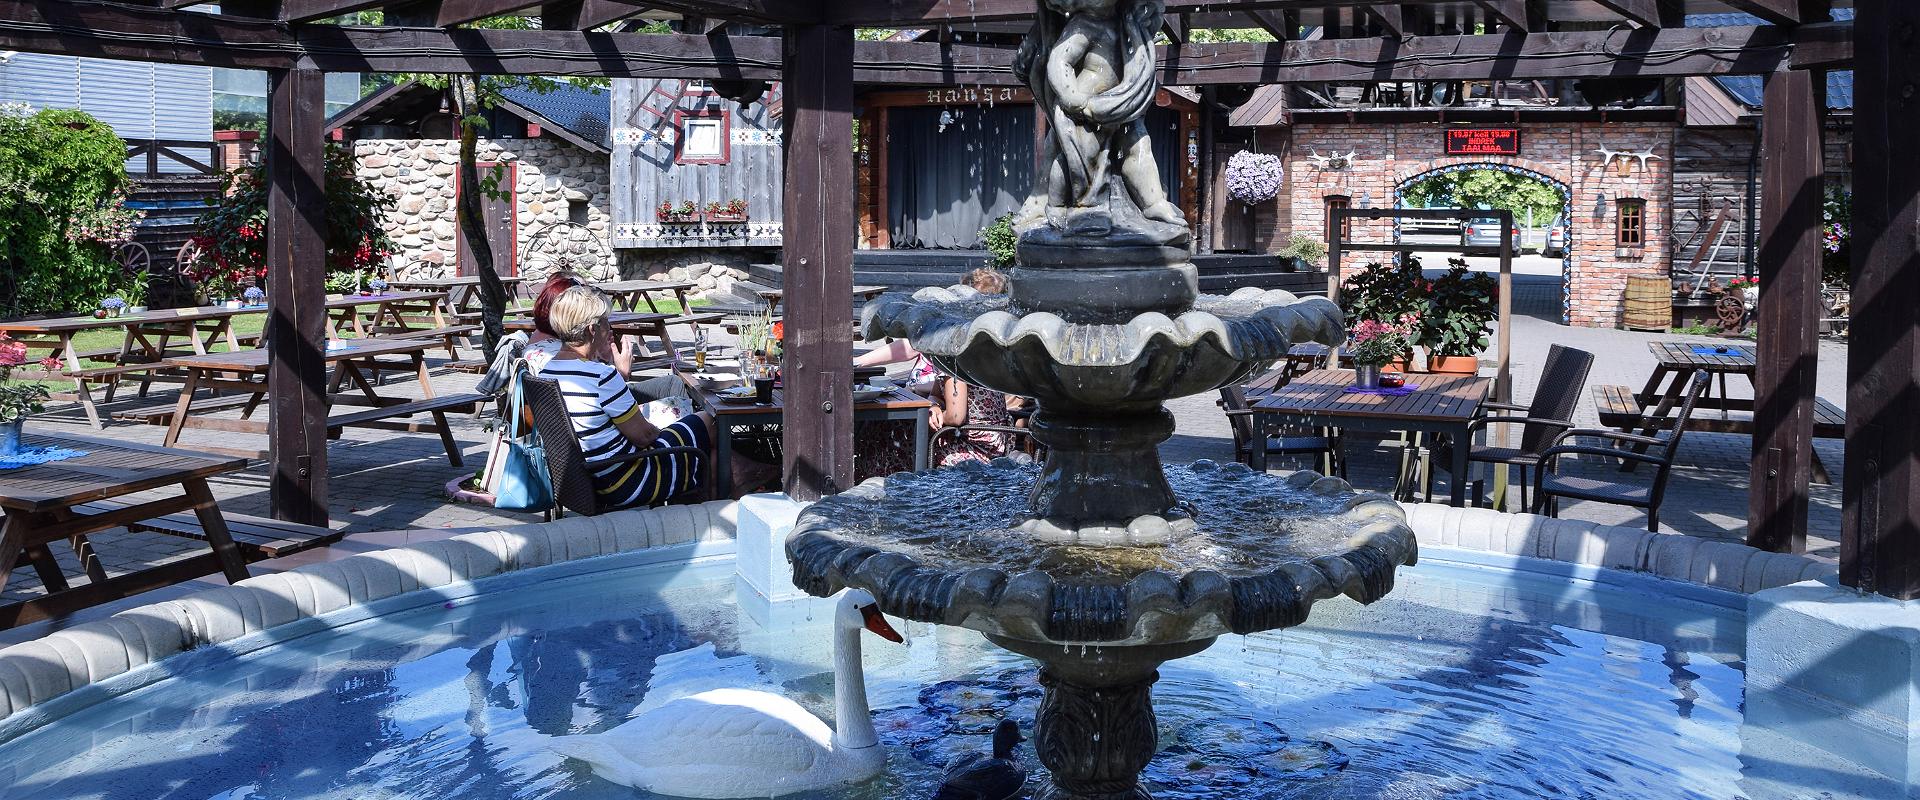 Hansatall tavern, courtyard with a fountain